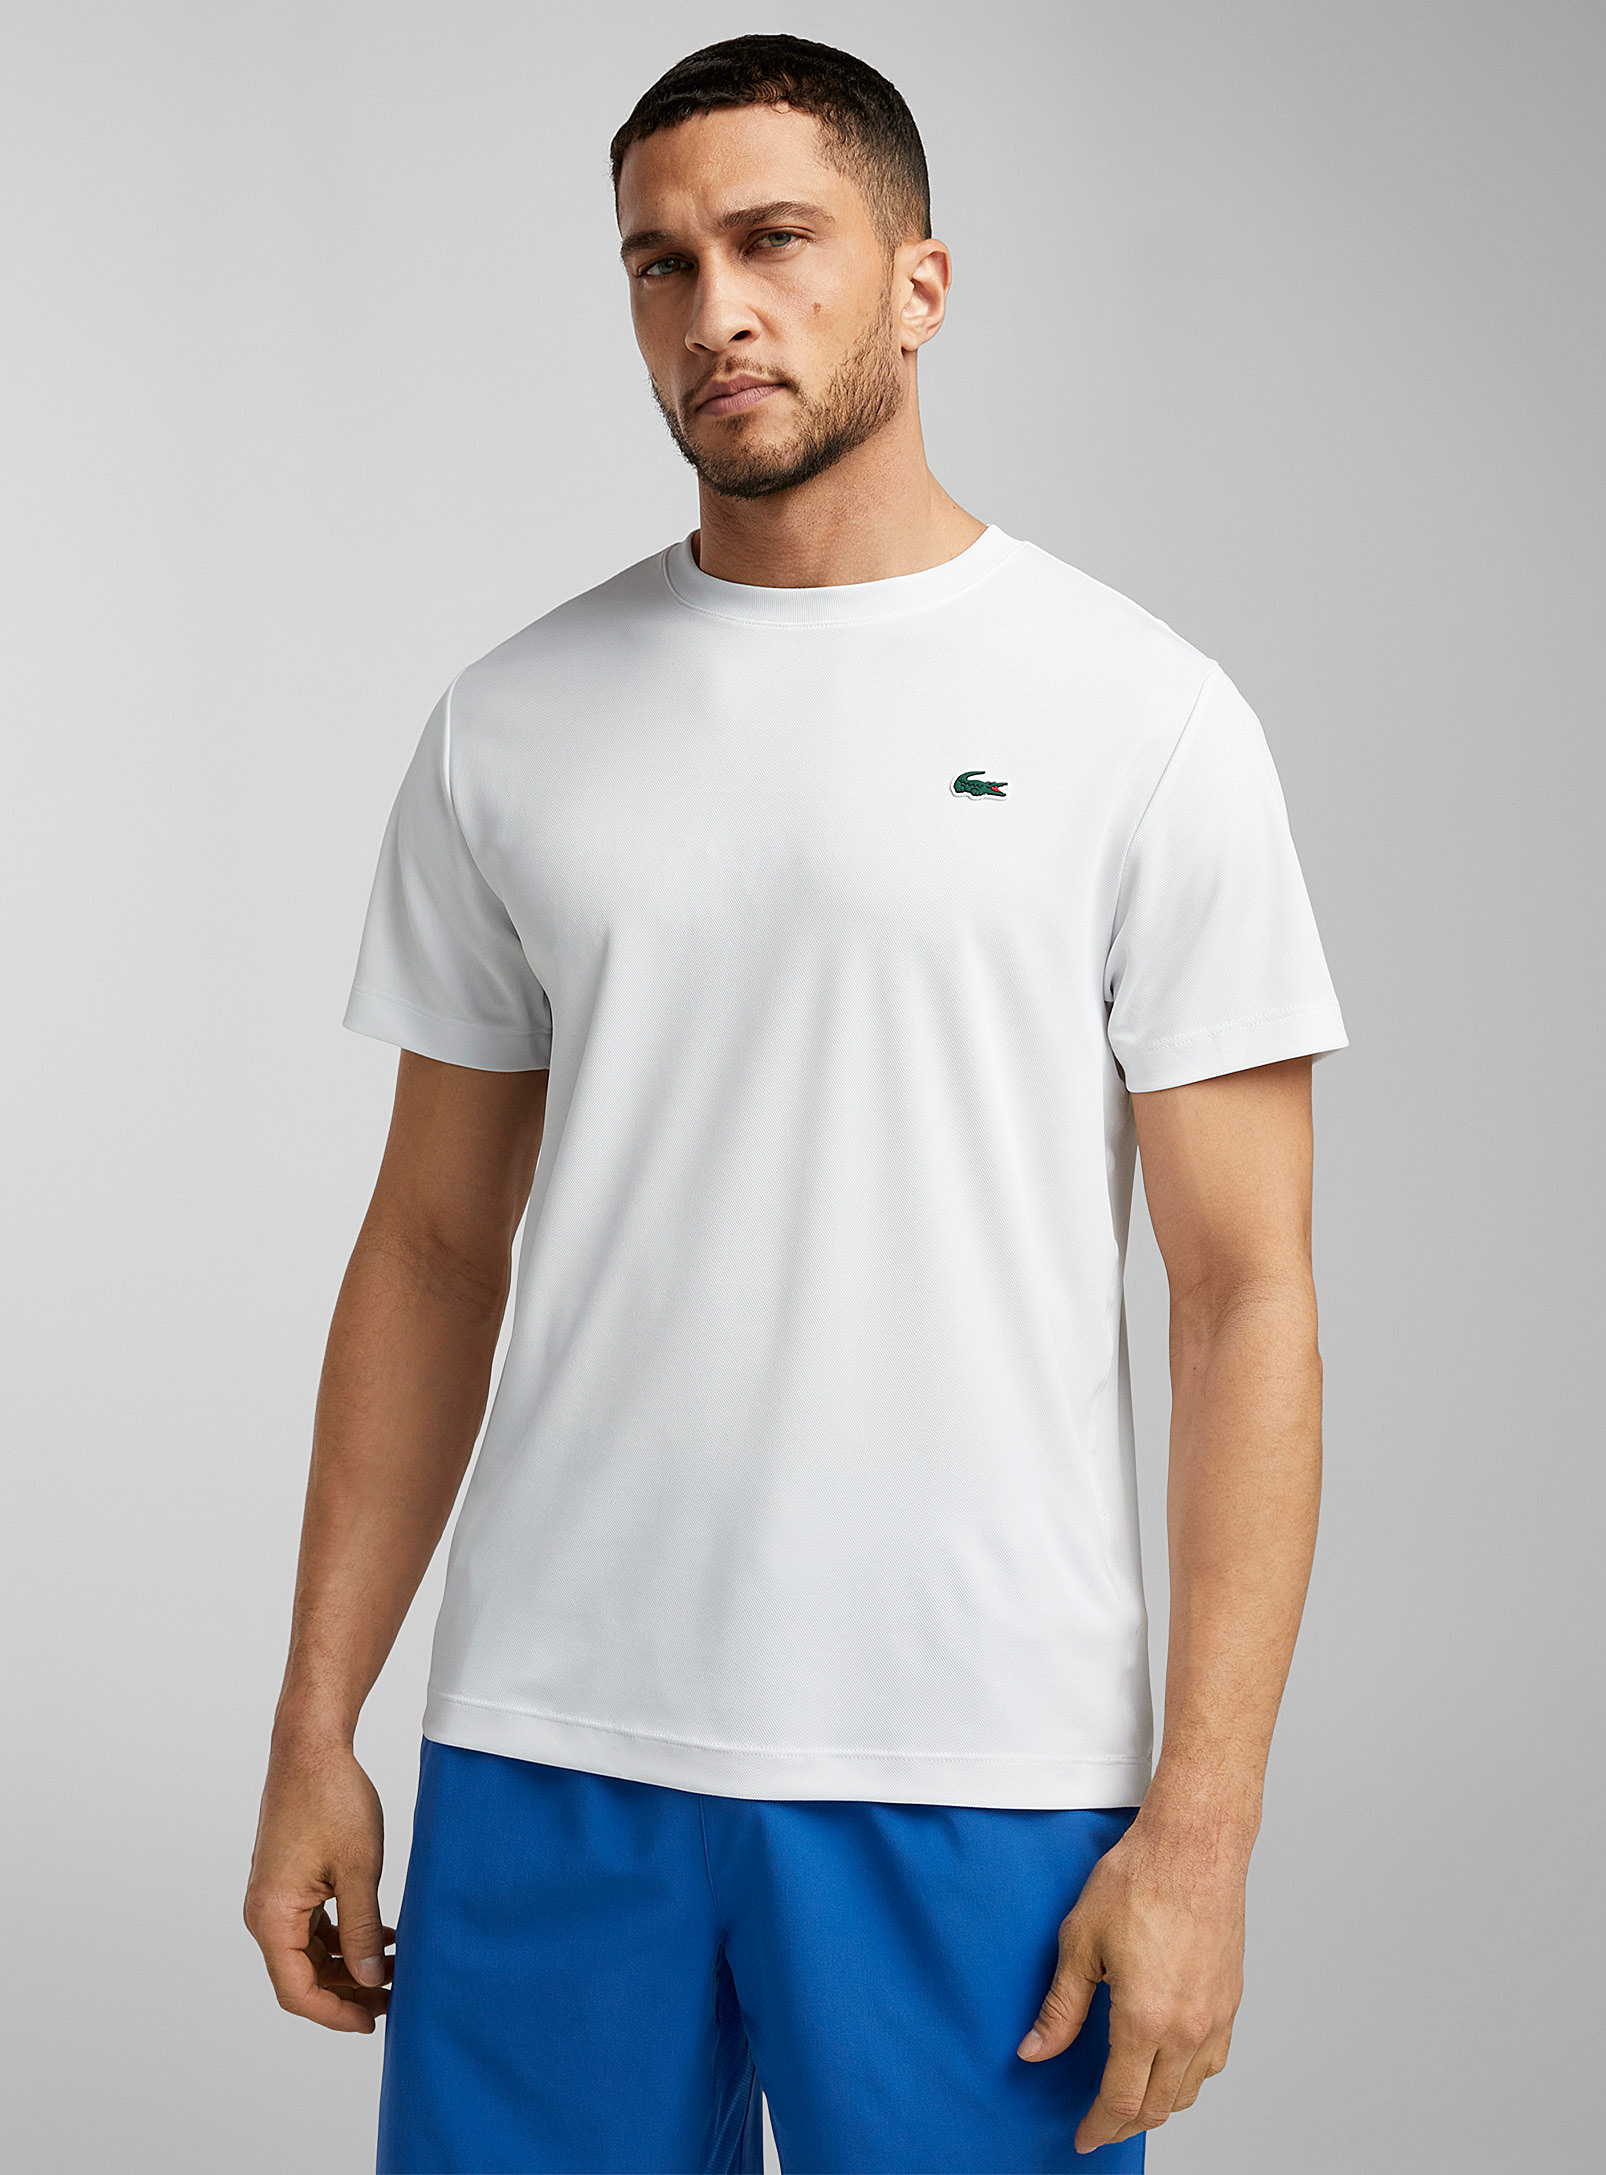 Lacoste - Men's White piqué jersey Tee Shirt